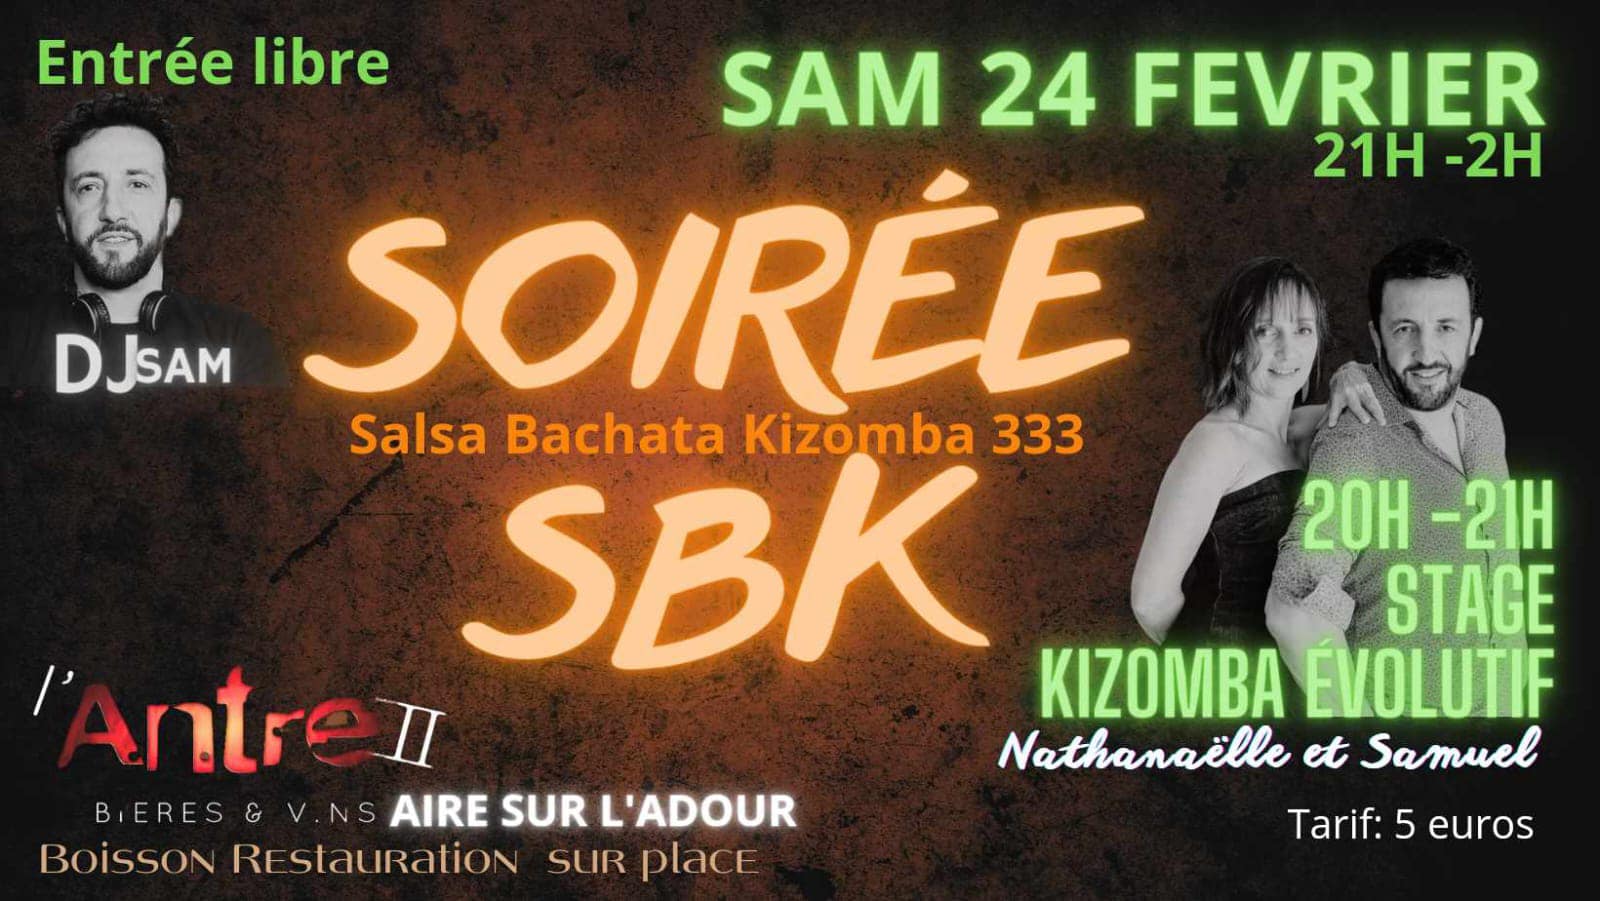 Soirée Salsa Bachatak Kizomba-L'Antre II